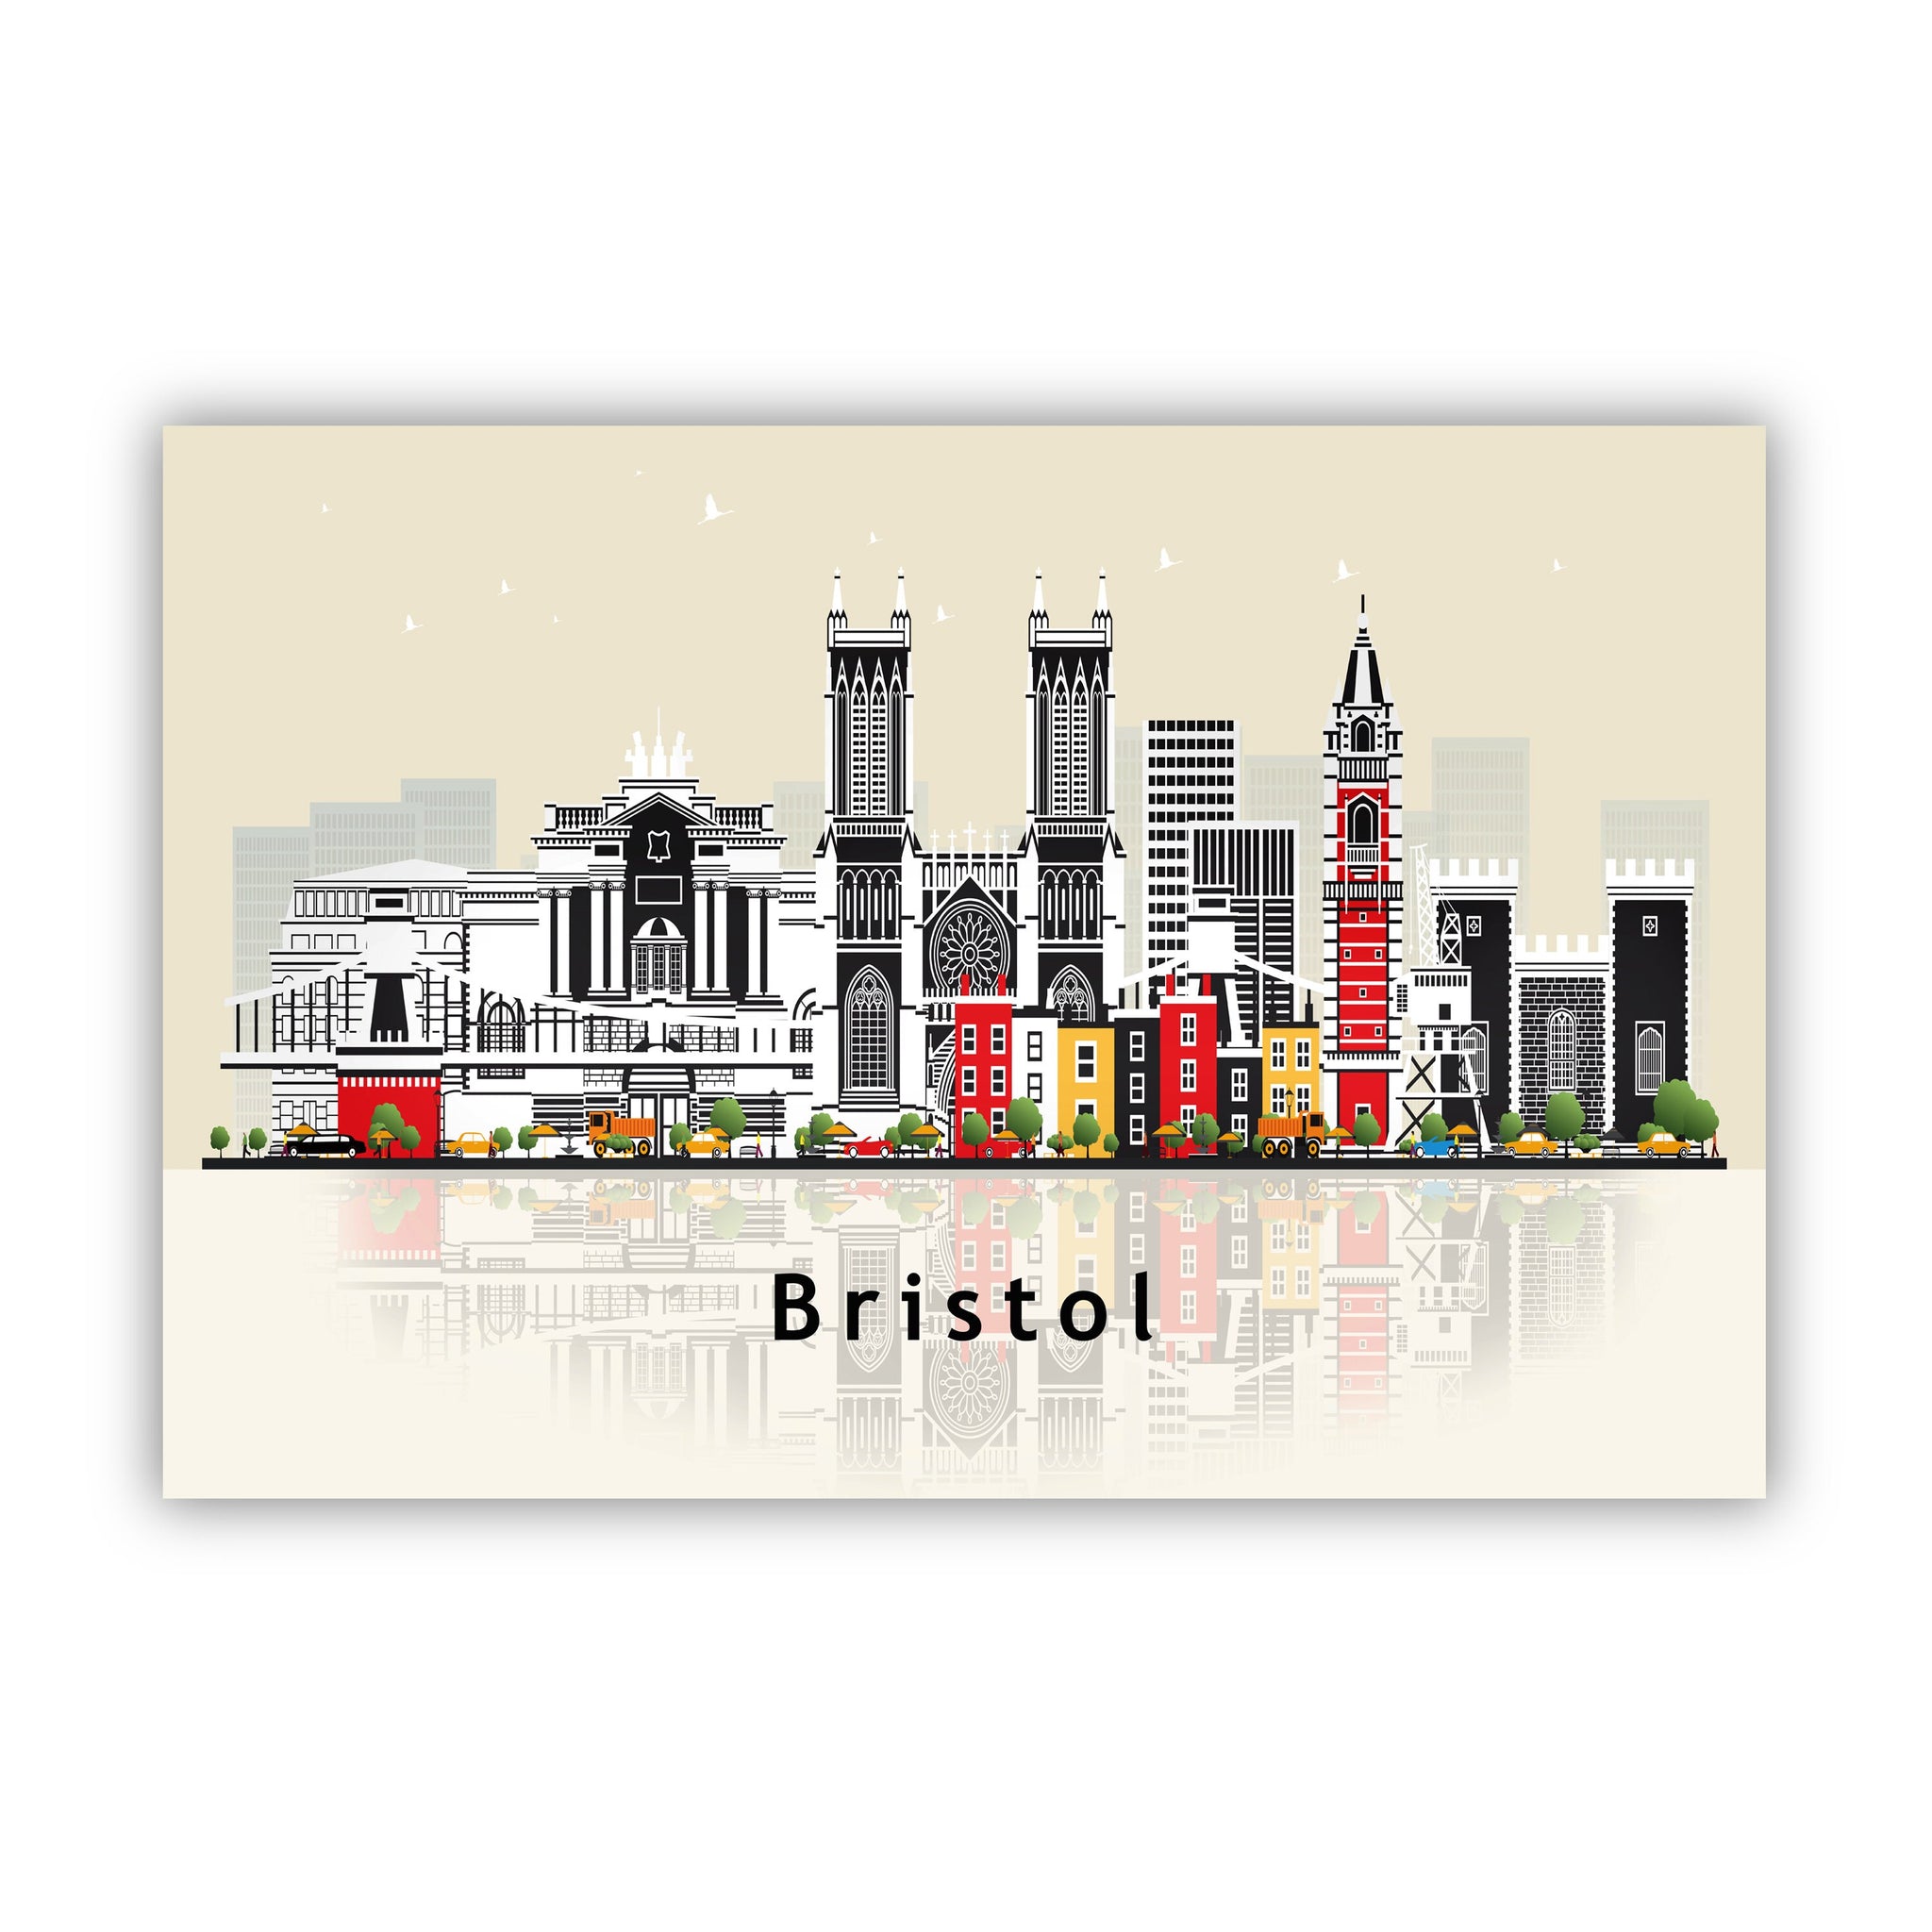 BRISTOL PENNSYLVANIA Illustration skyline poster, Bristol State modern skyline cityscape poster, Landmark art print, Home decoration idea